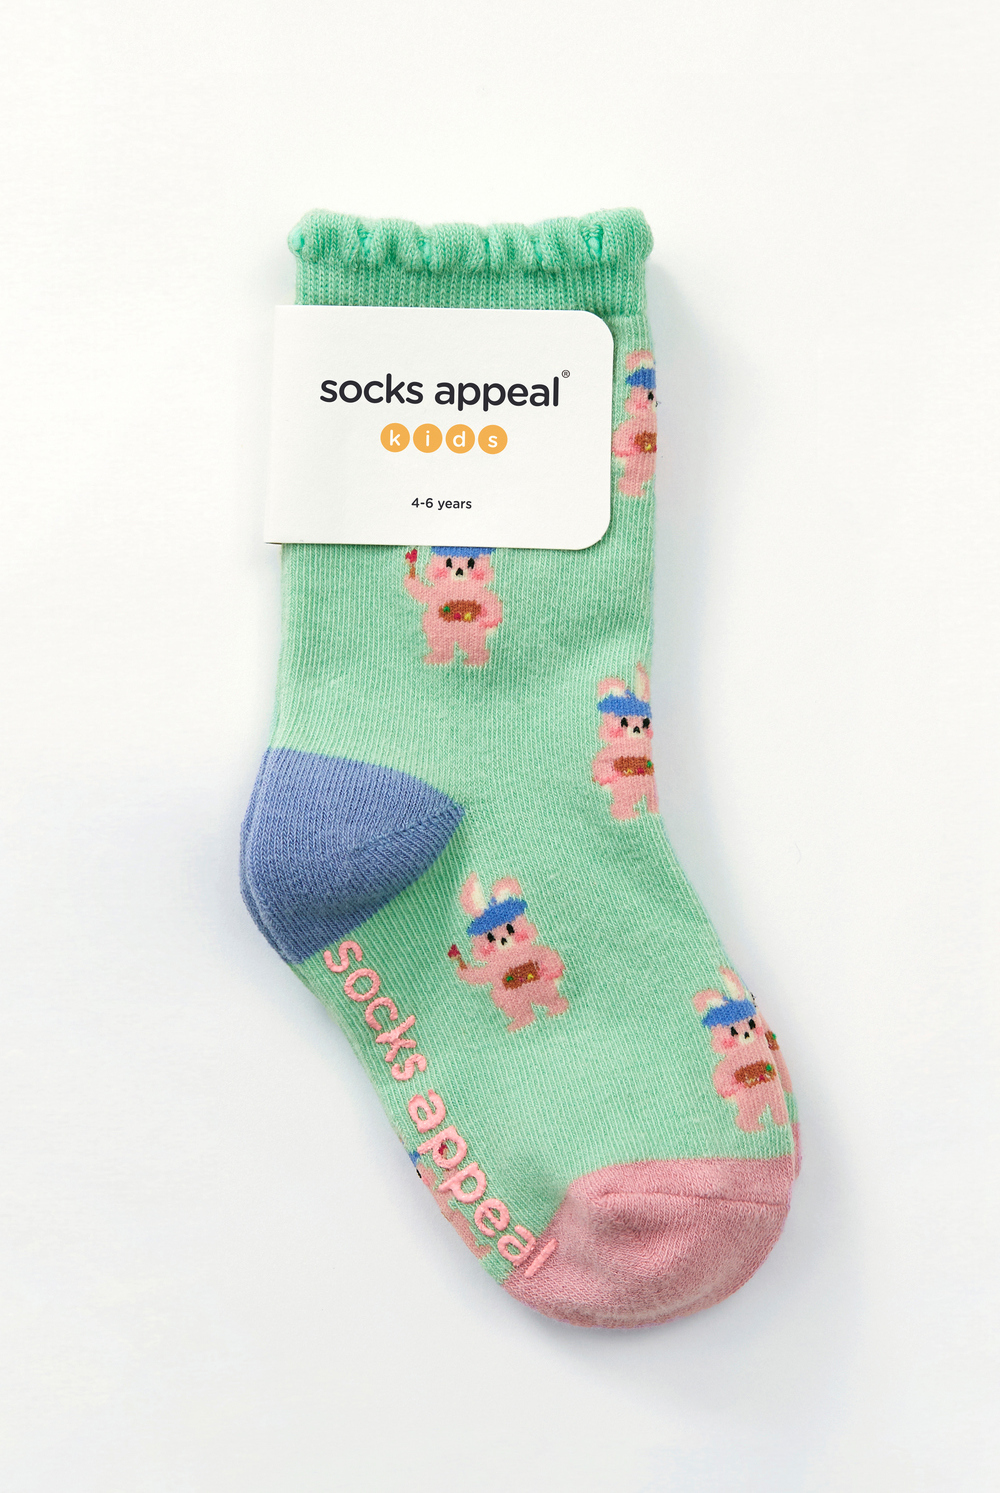 socks mint color image-S1L8